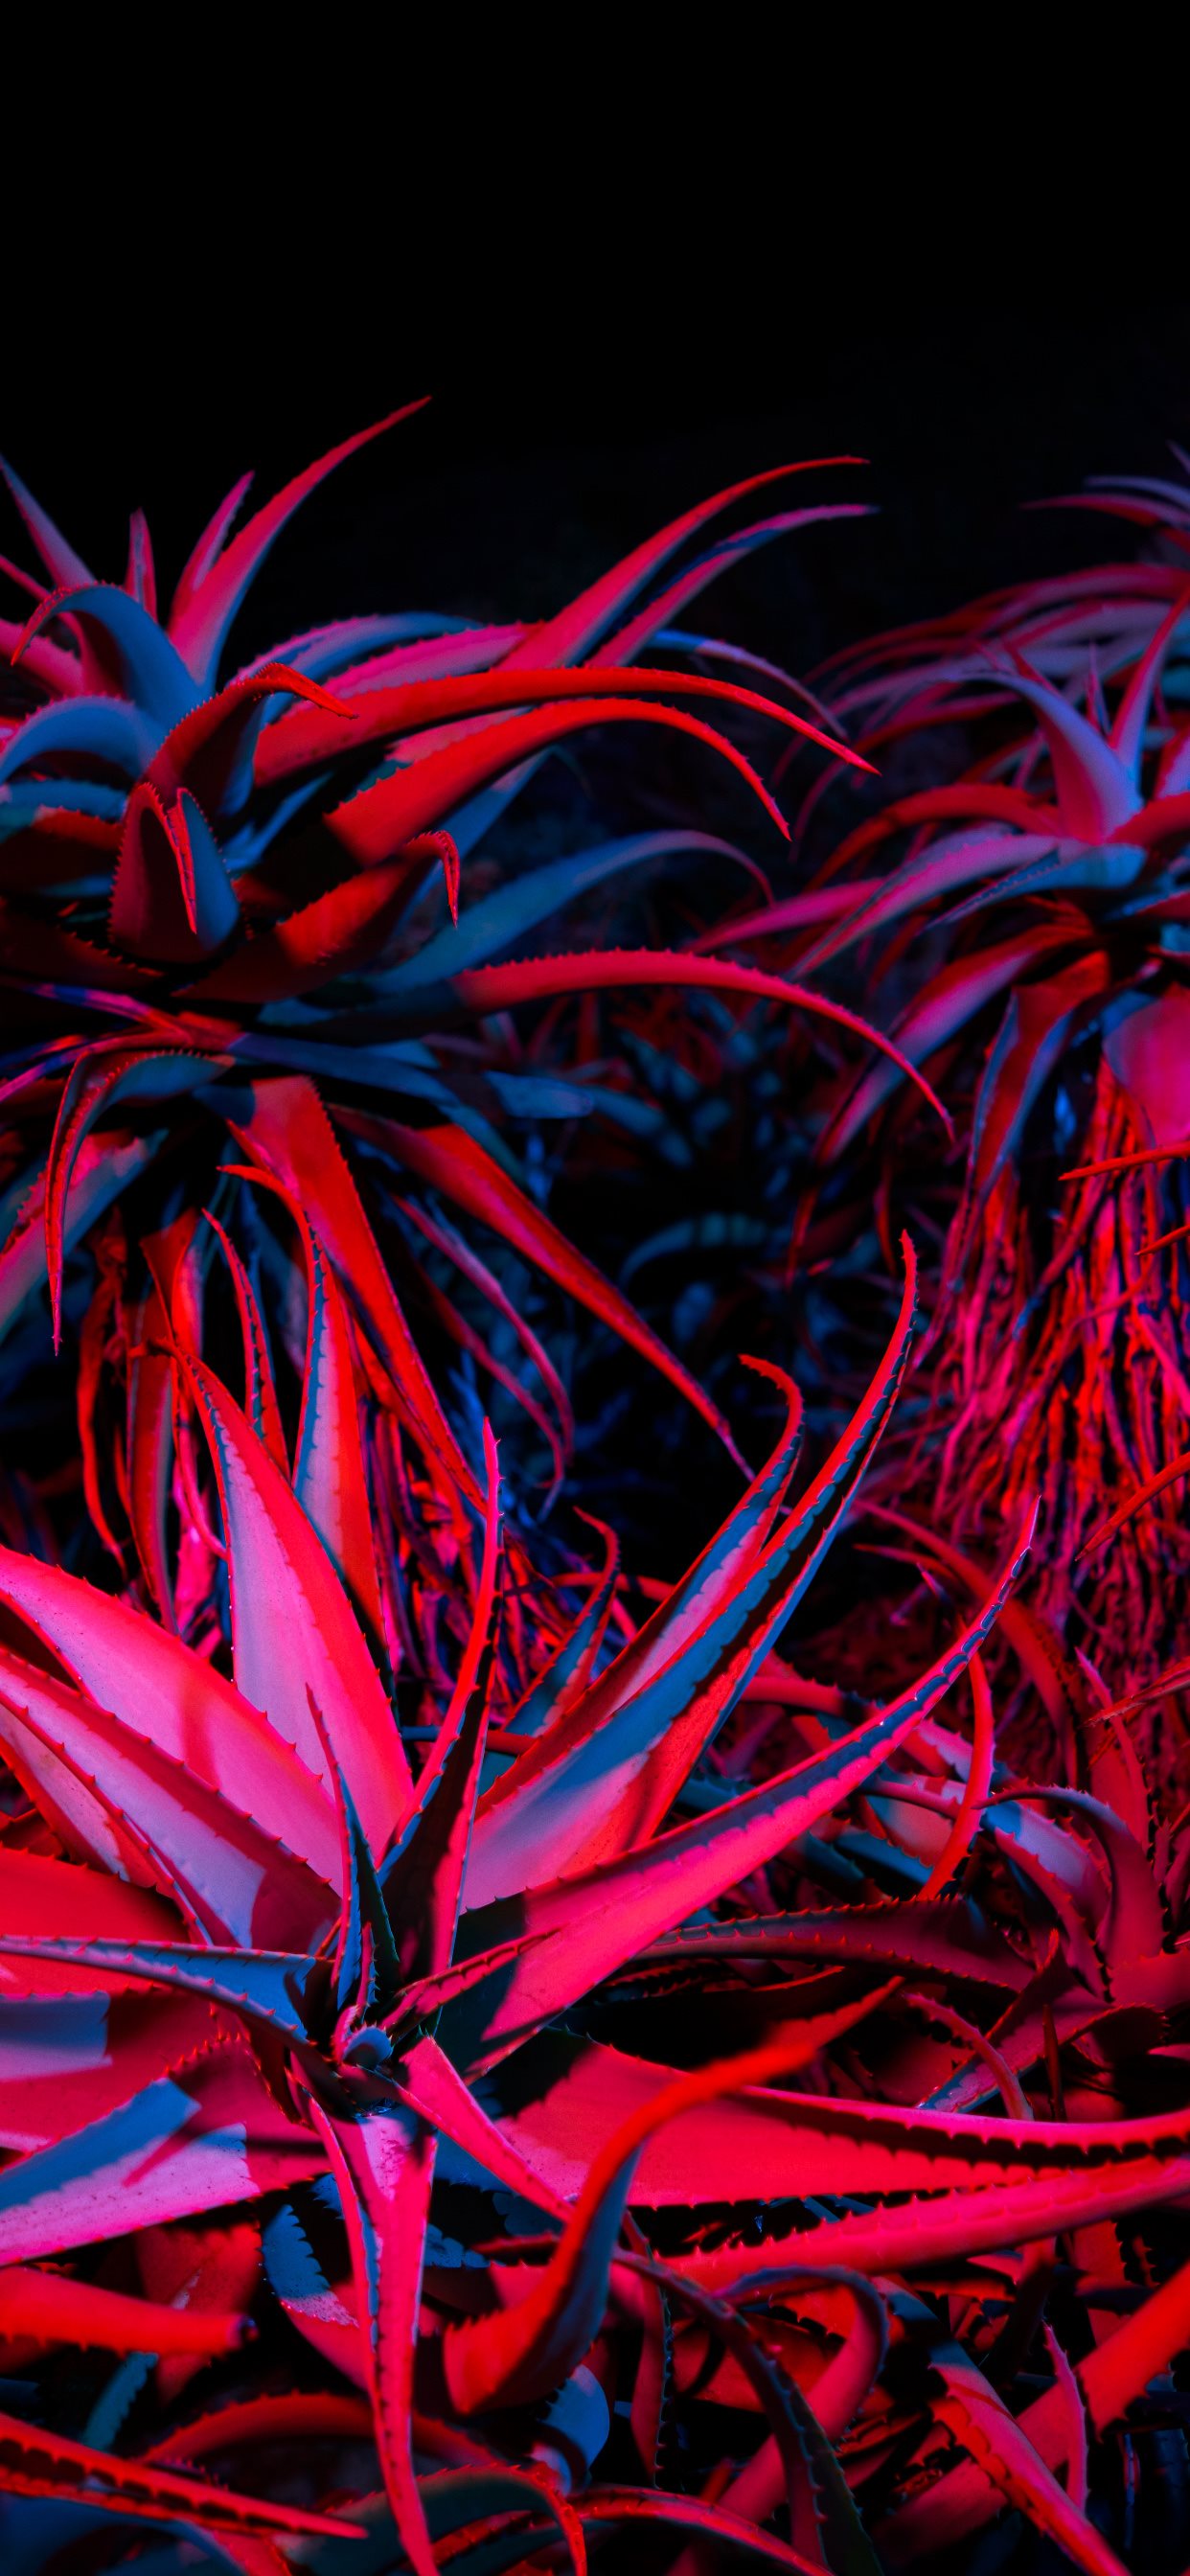 Big Sur Succulents by AR7 iPhone wallpaper 